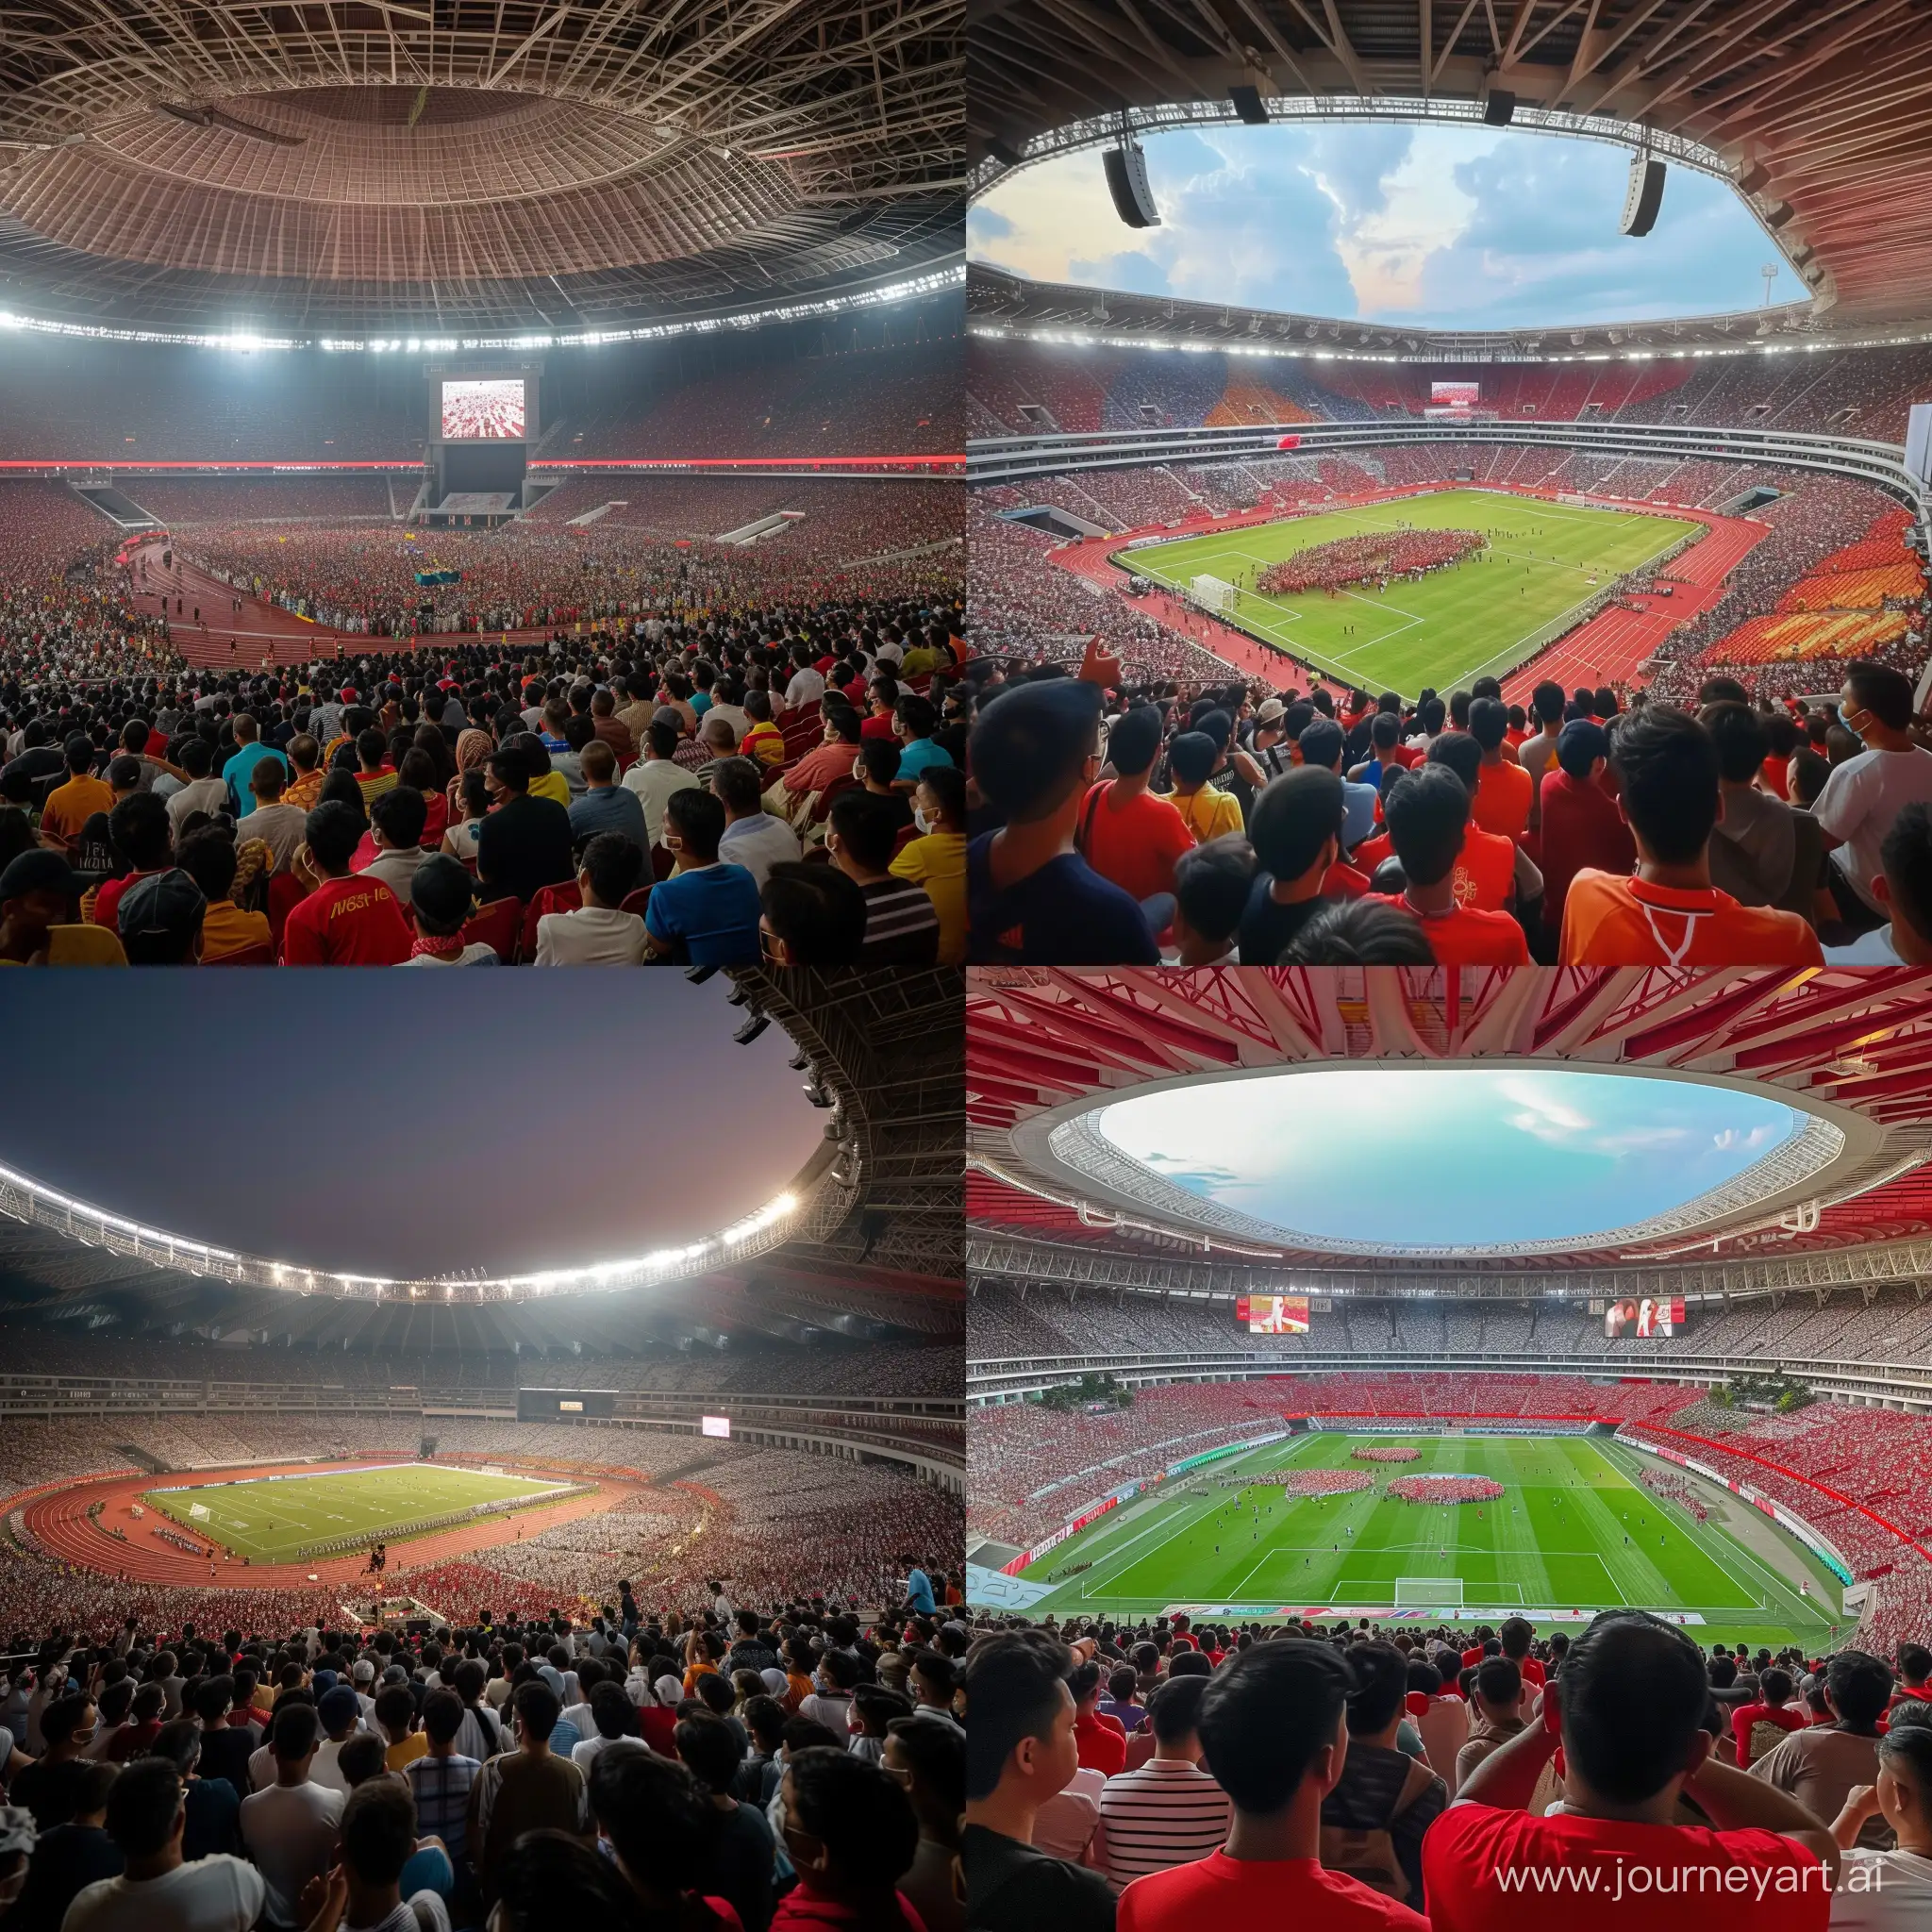 Millions of people inside the jakarta international stadium